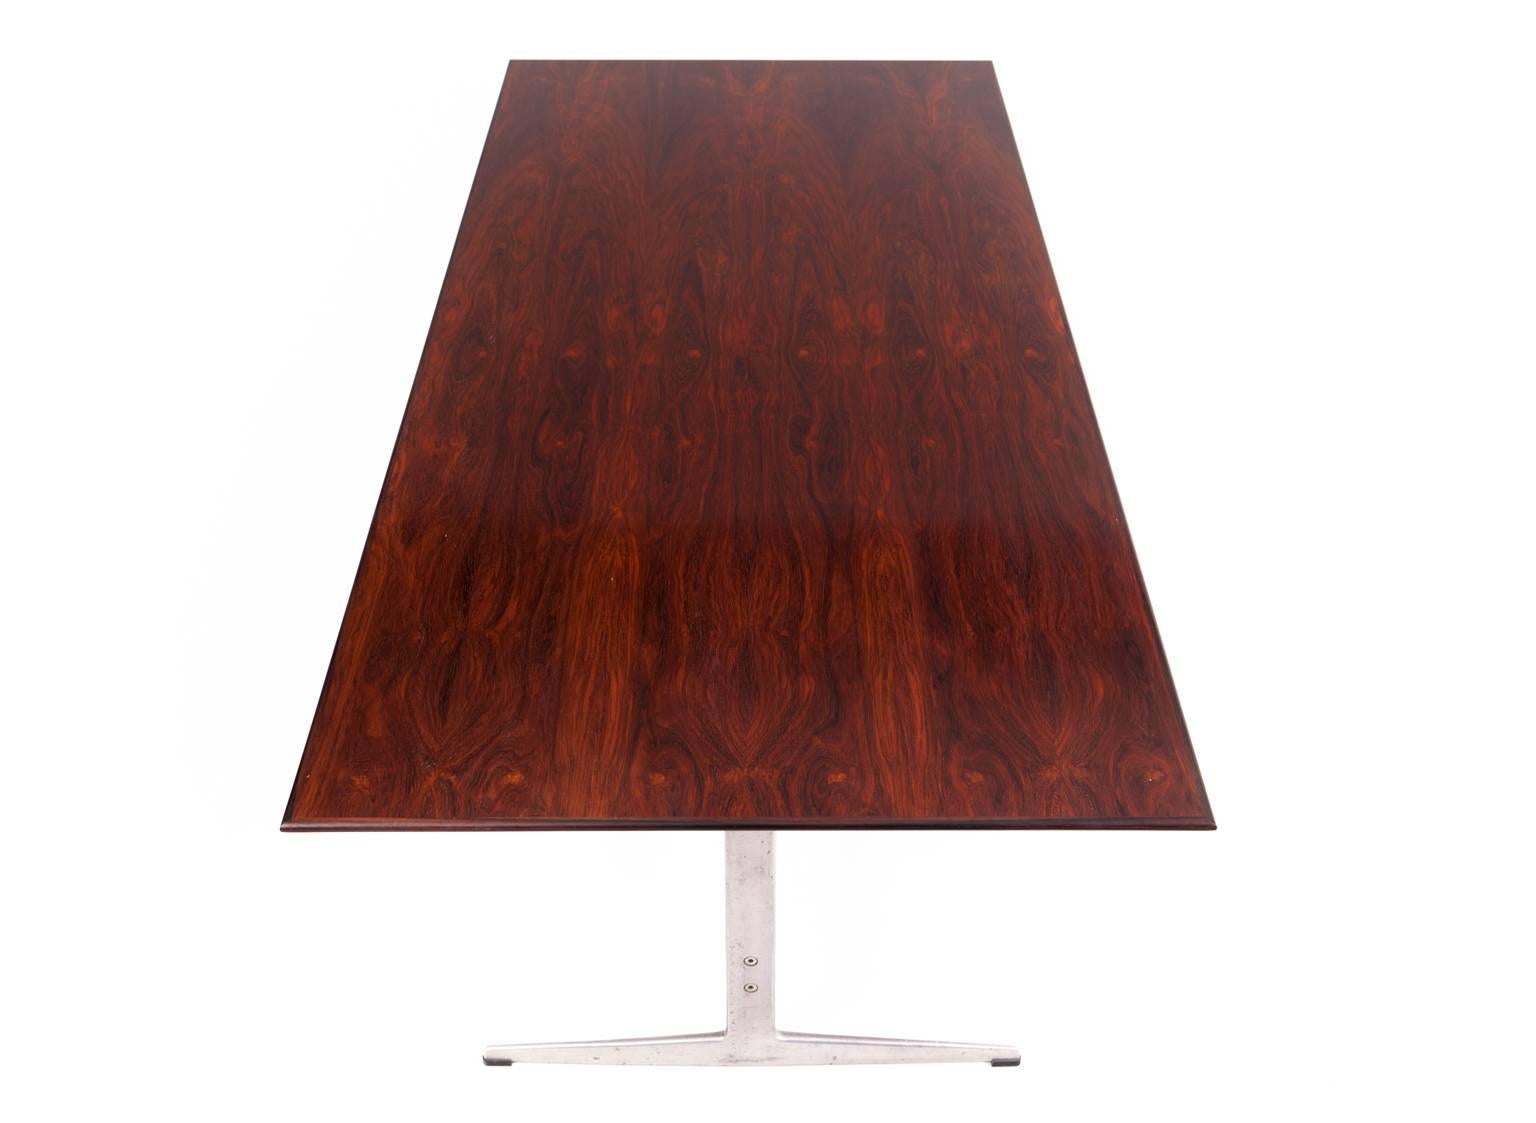 Scandinavian Modern Arne Jacobsen Shaker Dining Table in Rosewood For Sale